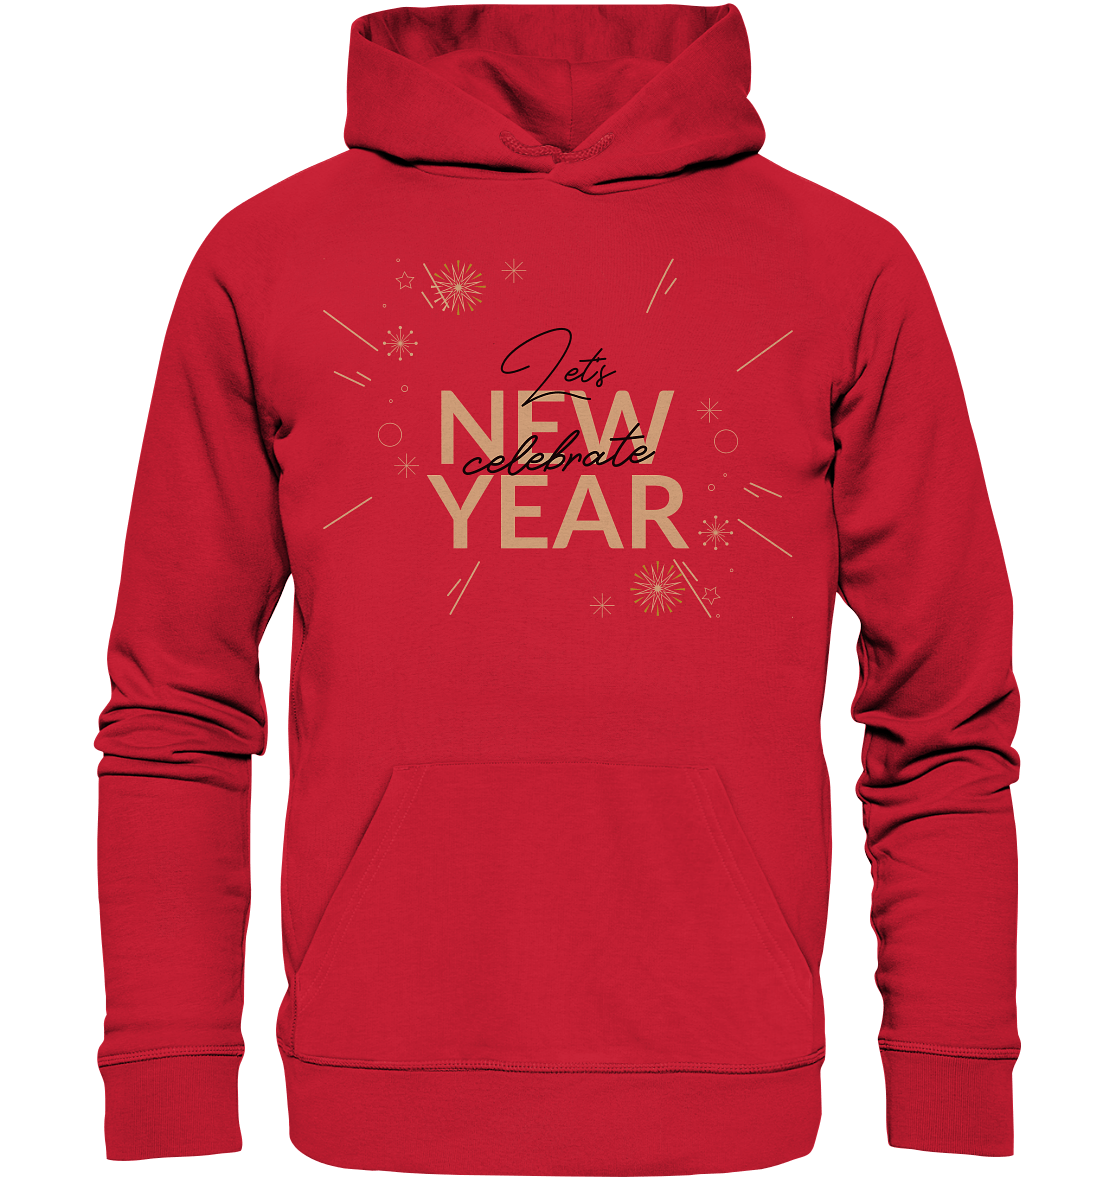 Silvester Kapuzenpullover in rot mit Lettering  Happy New Year Let's celebrate